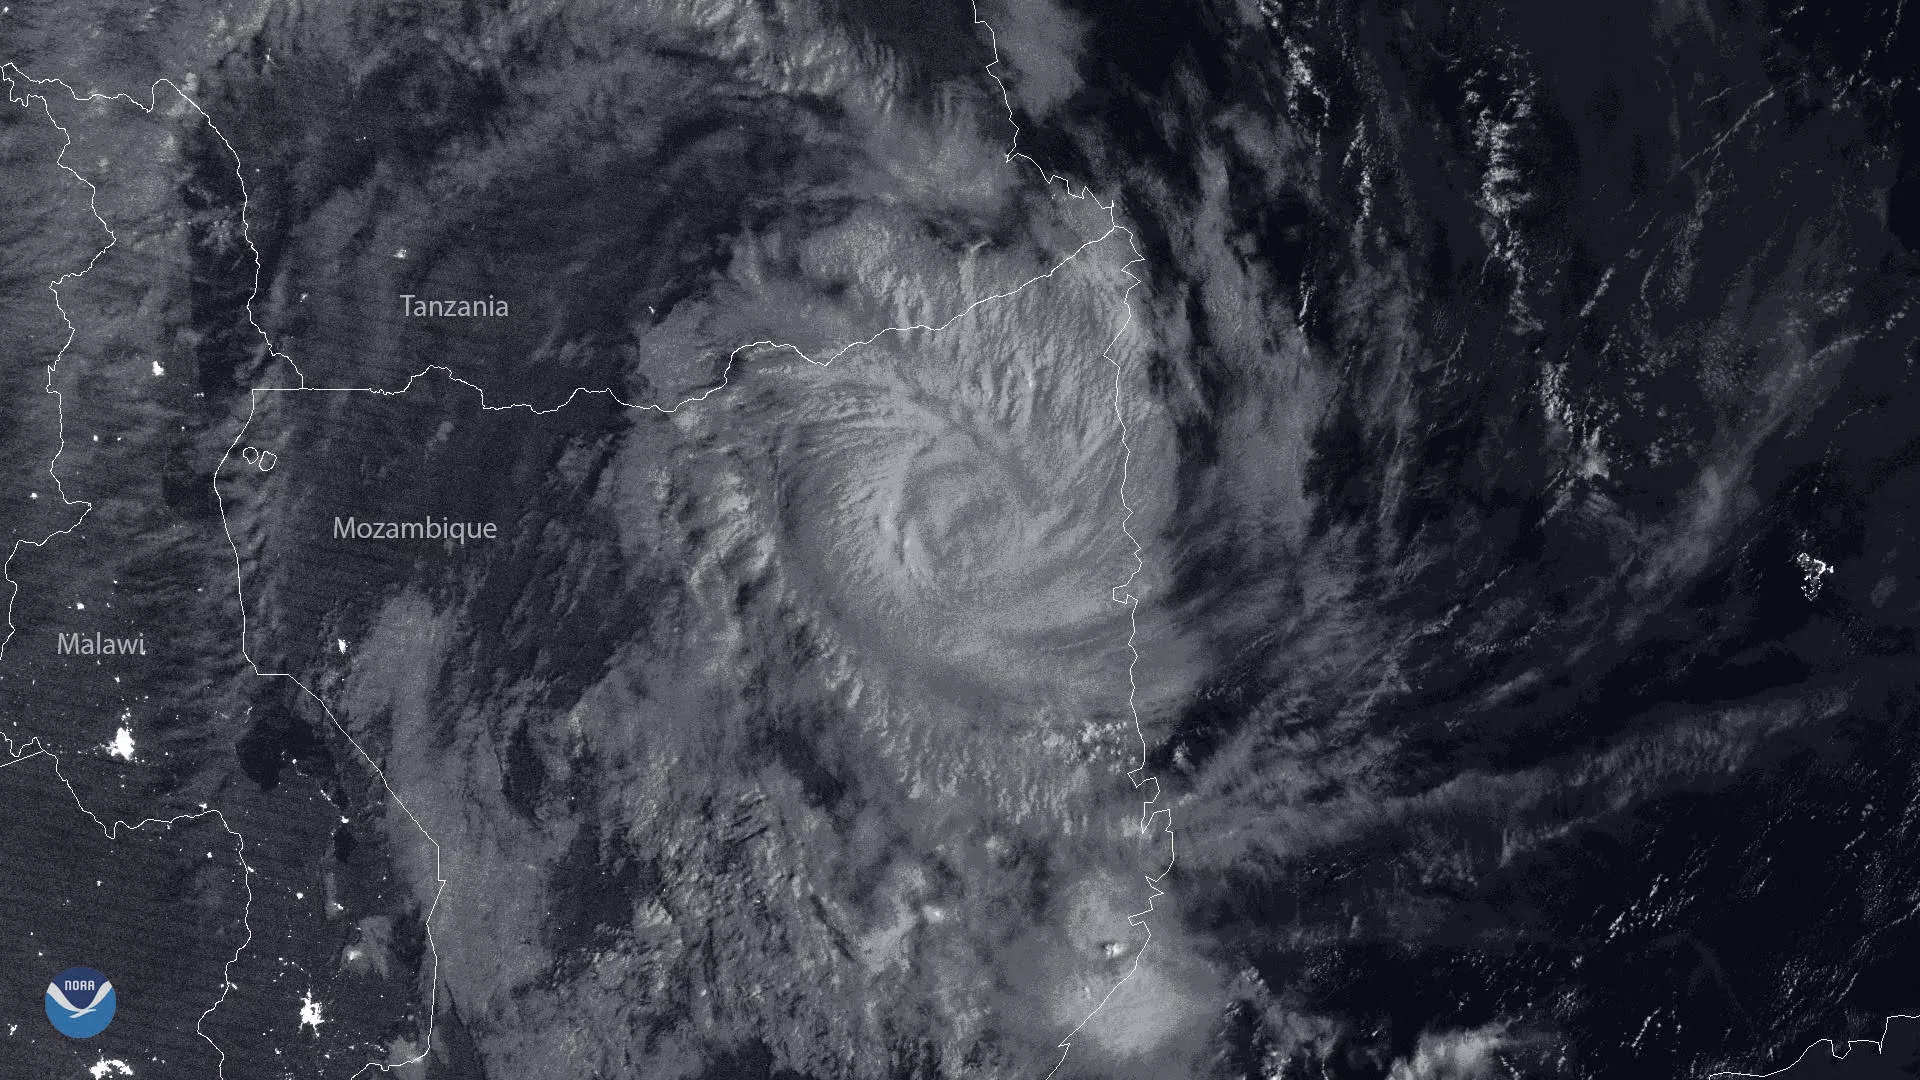 NOAA-20 True Color capture of Tropical Cyclone Kenneth striking Mozambique coastline, April 26, 2019. 